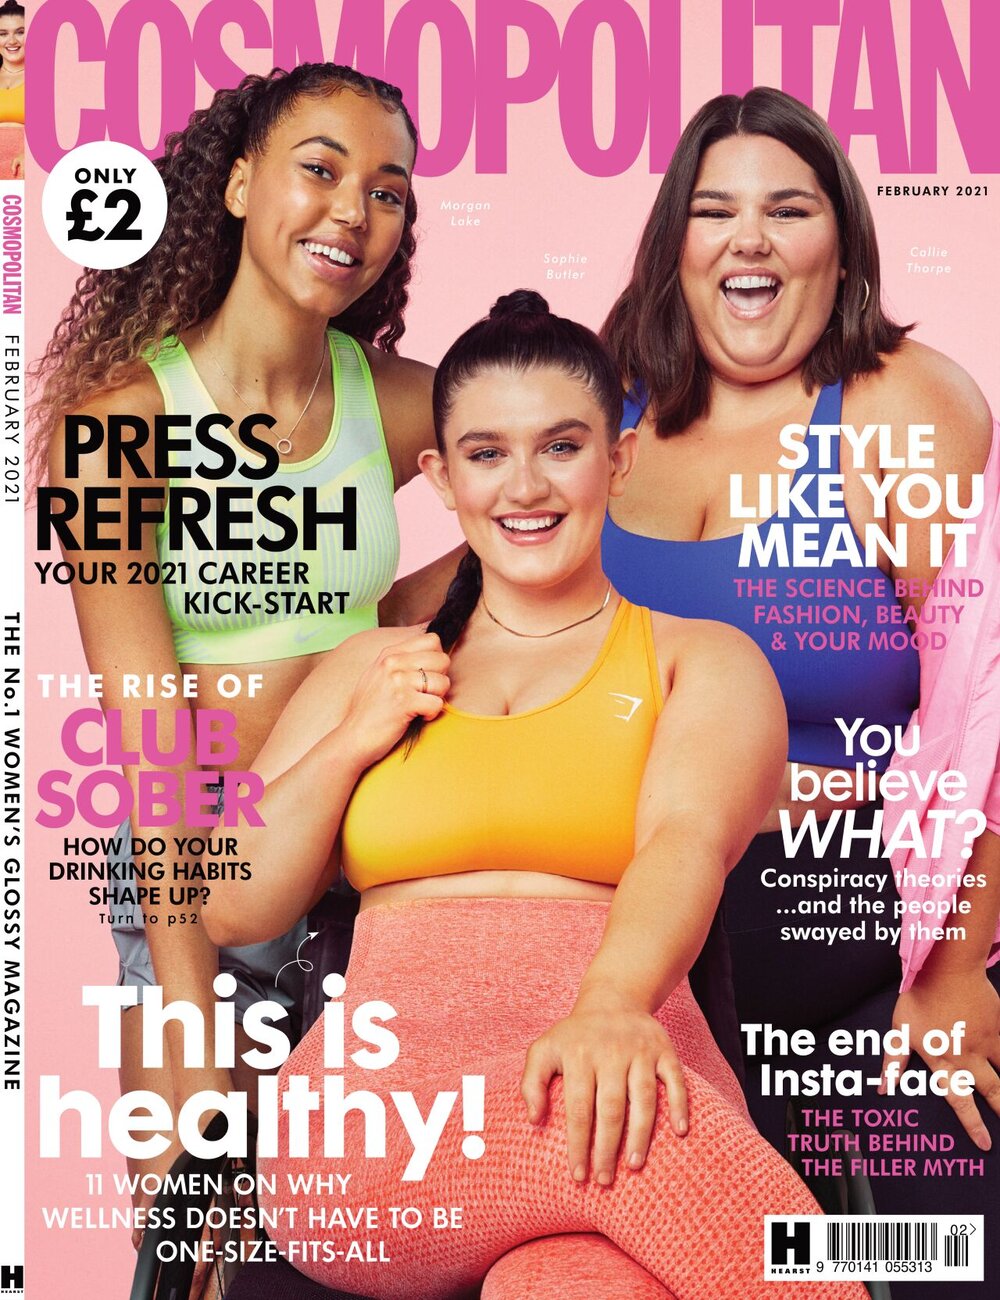 Cover_Readly_Cosmopolitan UK.jpg